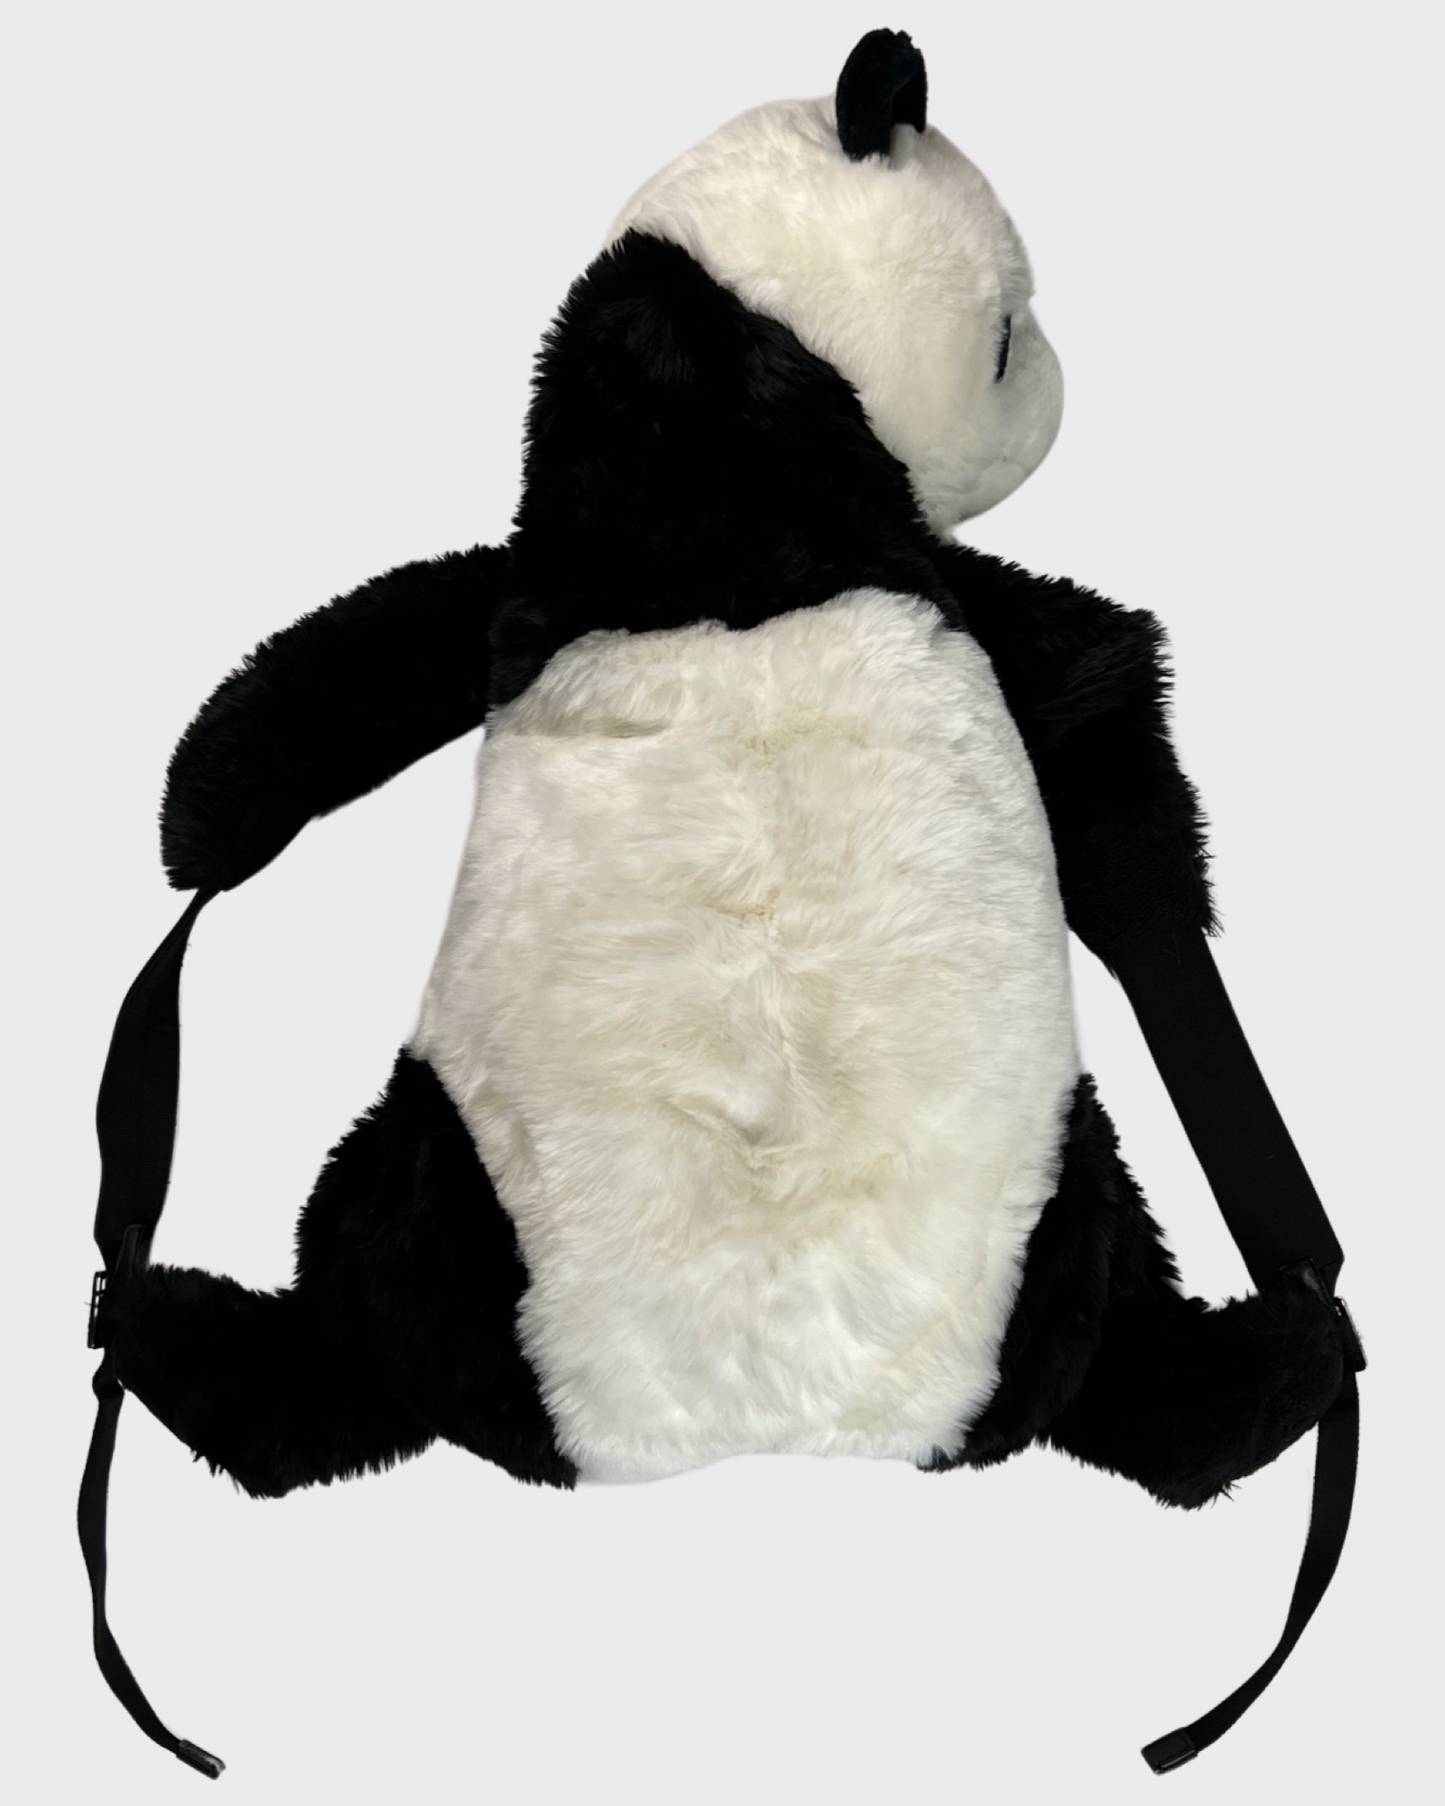 Dolce & Gabbana AW17 Panda Backpack SZ:OS